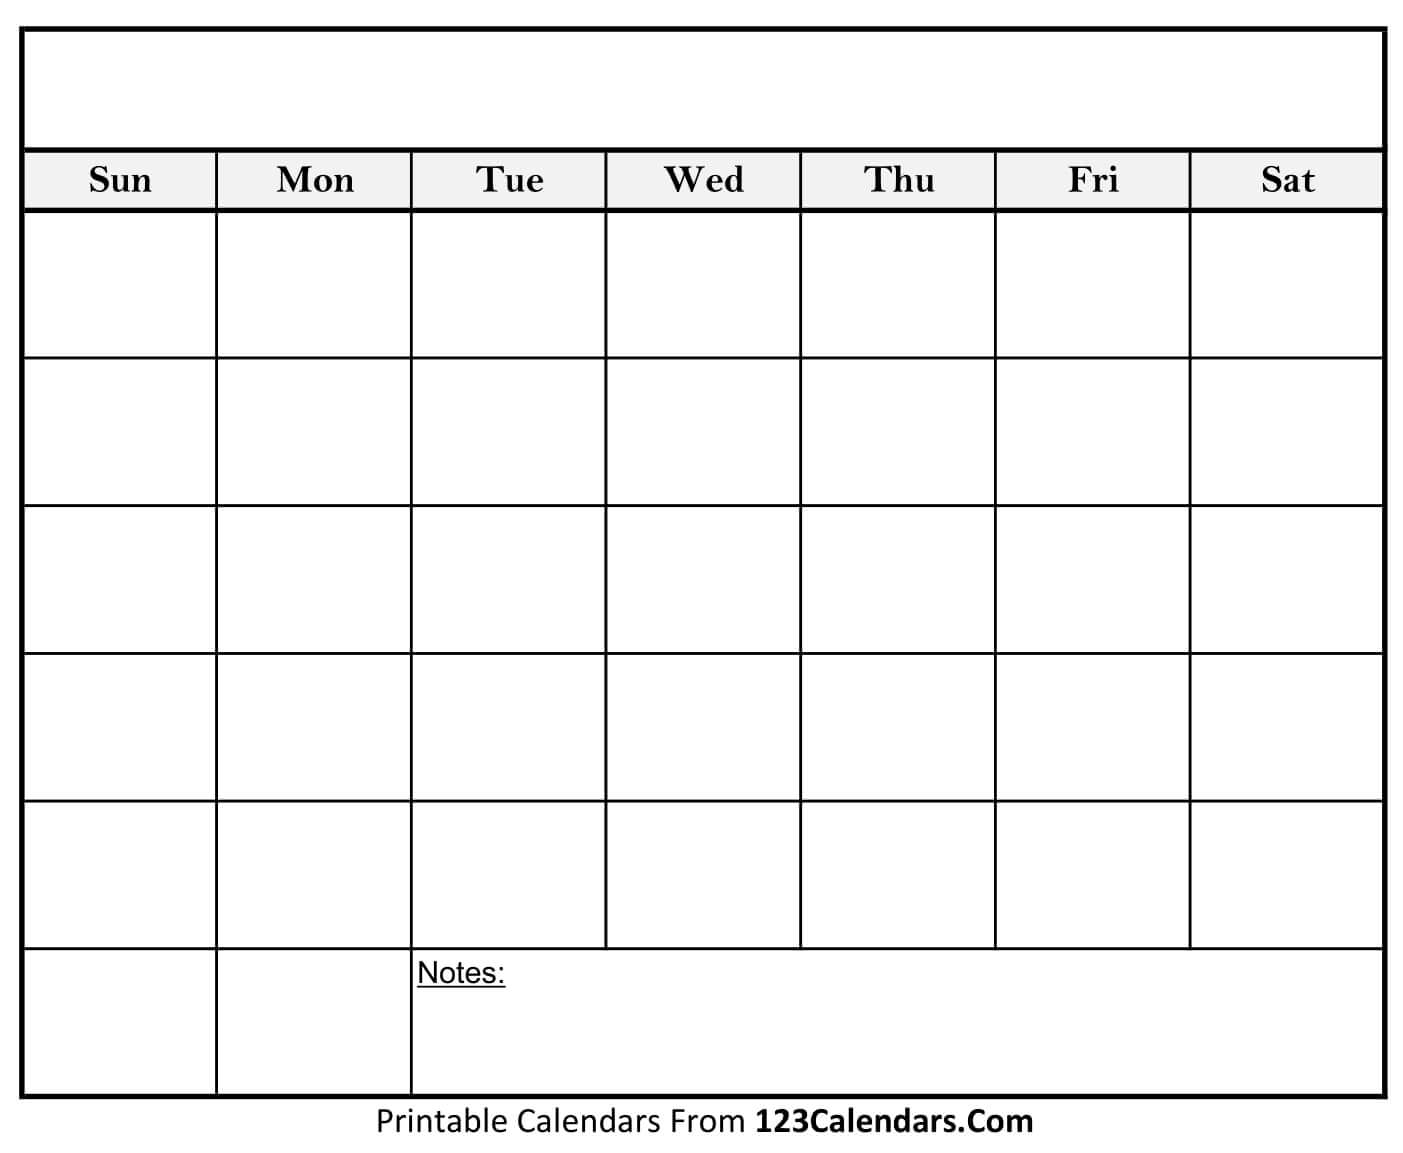 Free Printable Blank Calendar | 123Calendars Intended For Blank Calander Template